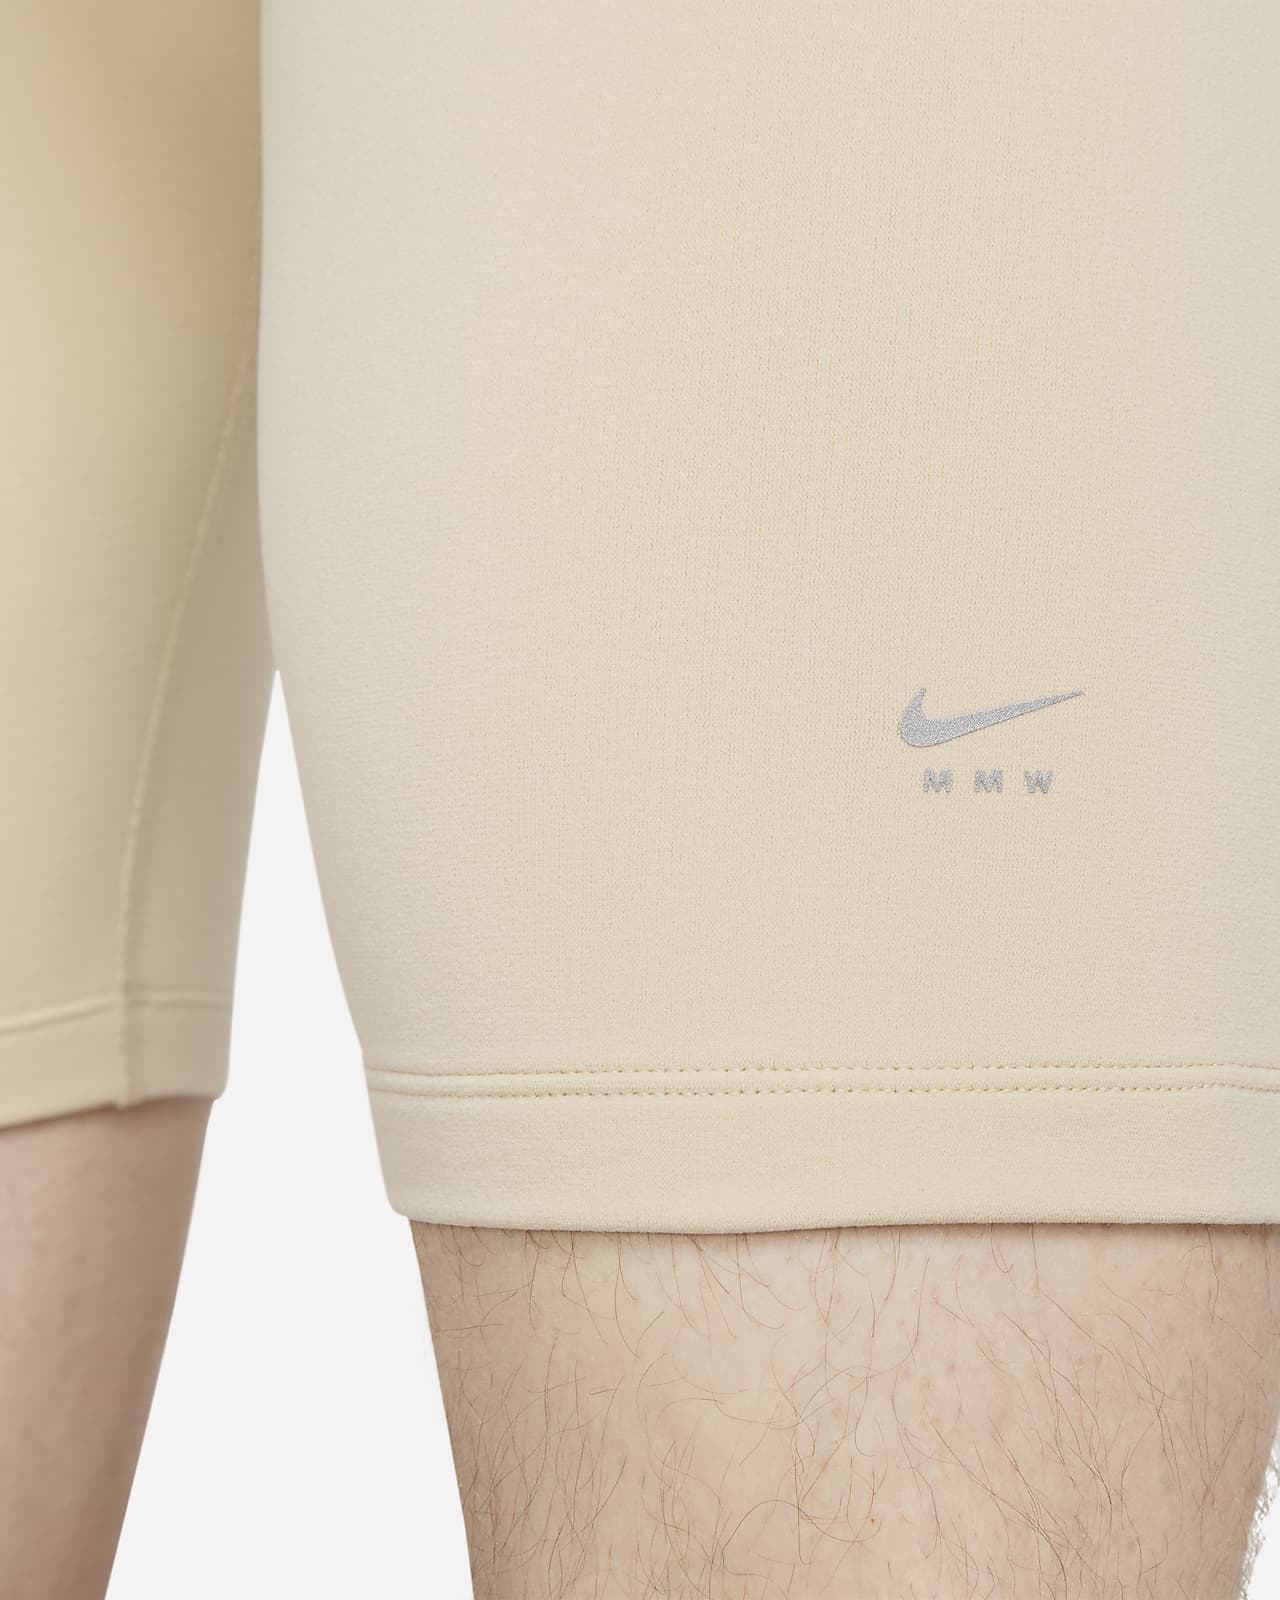 Nike x MMW Men’s 2-in-1 Shorts